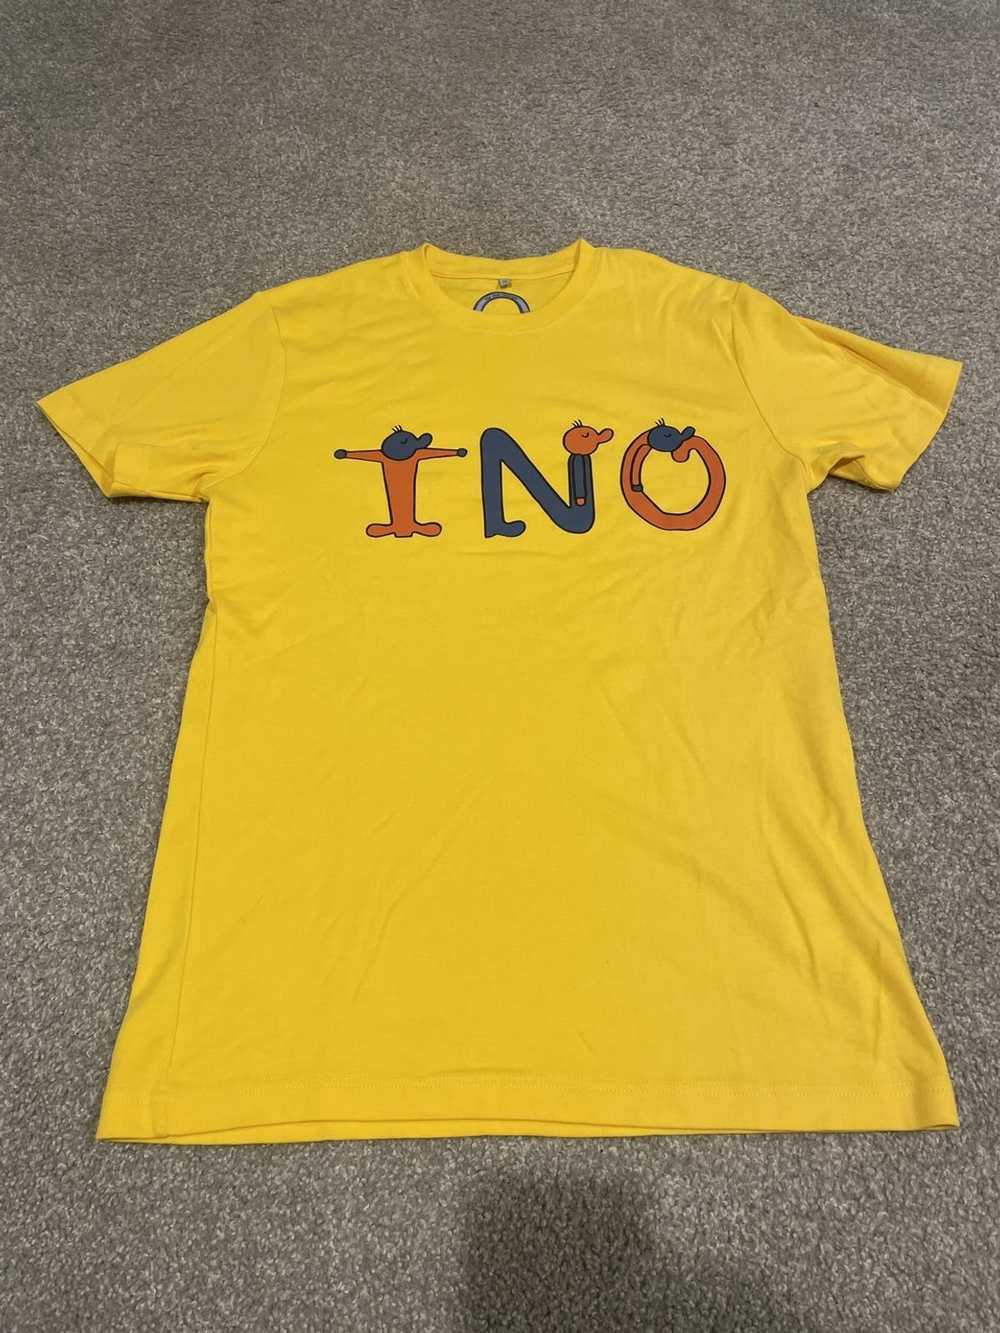 Brand The New Originals TNO Tshirt - image 1